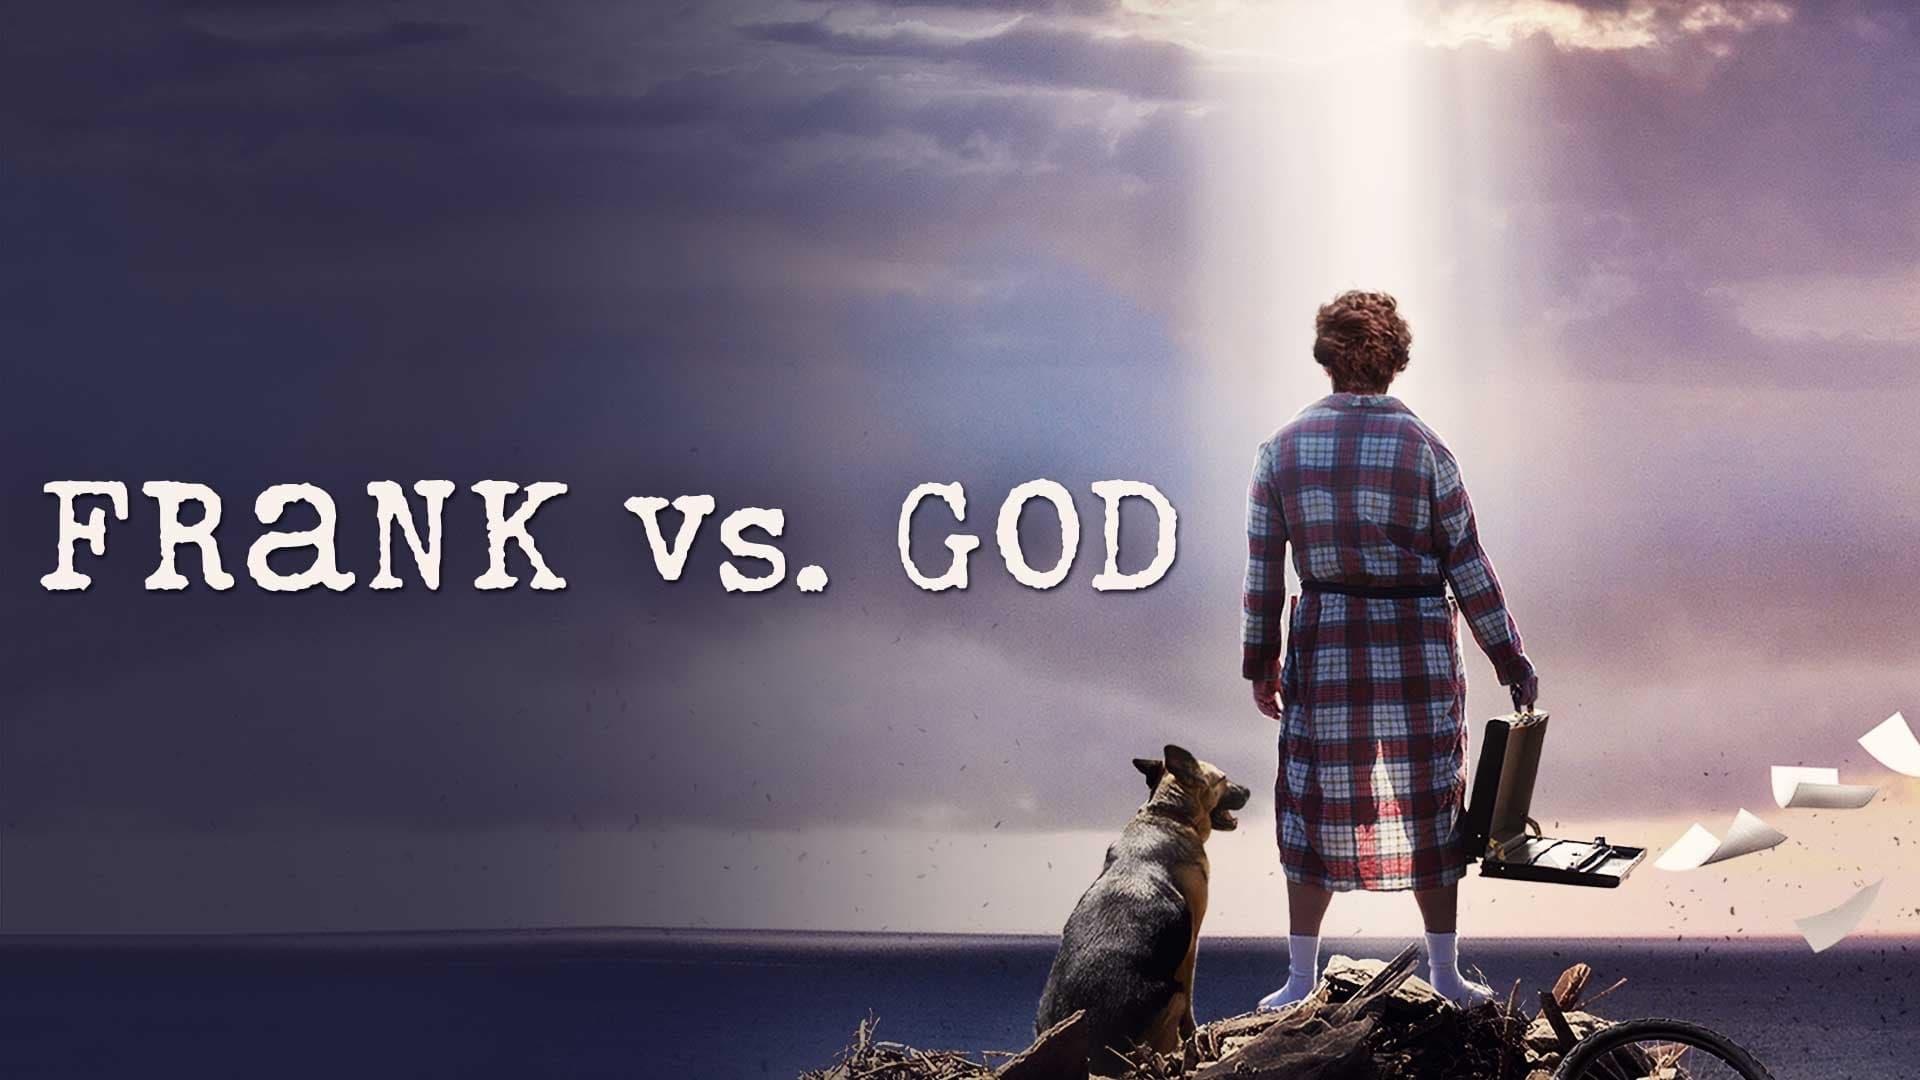 Frank vs. God backdrop